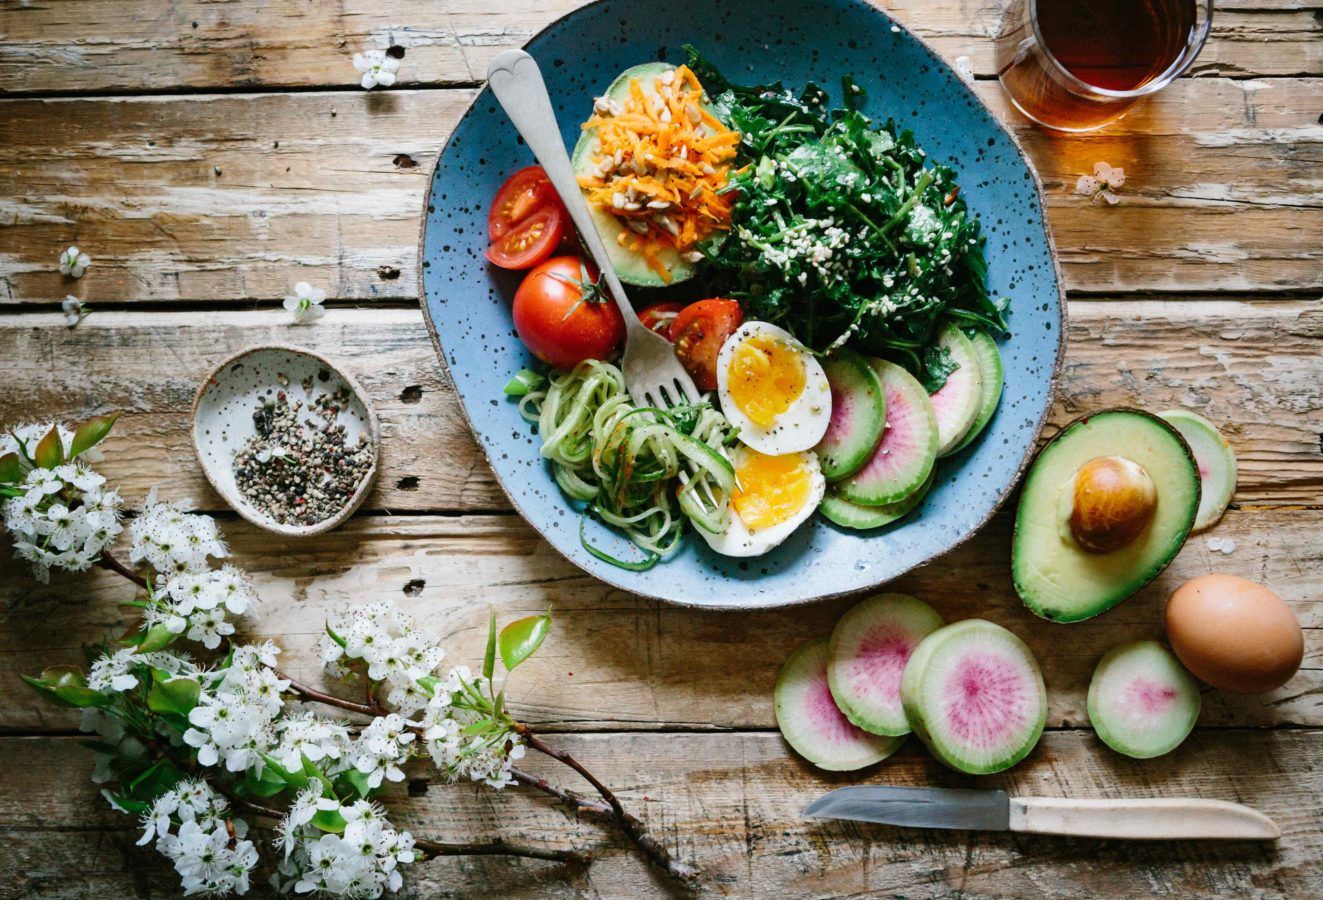 8 best vegetarian restaurants that deliver plant-based meals to you